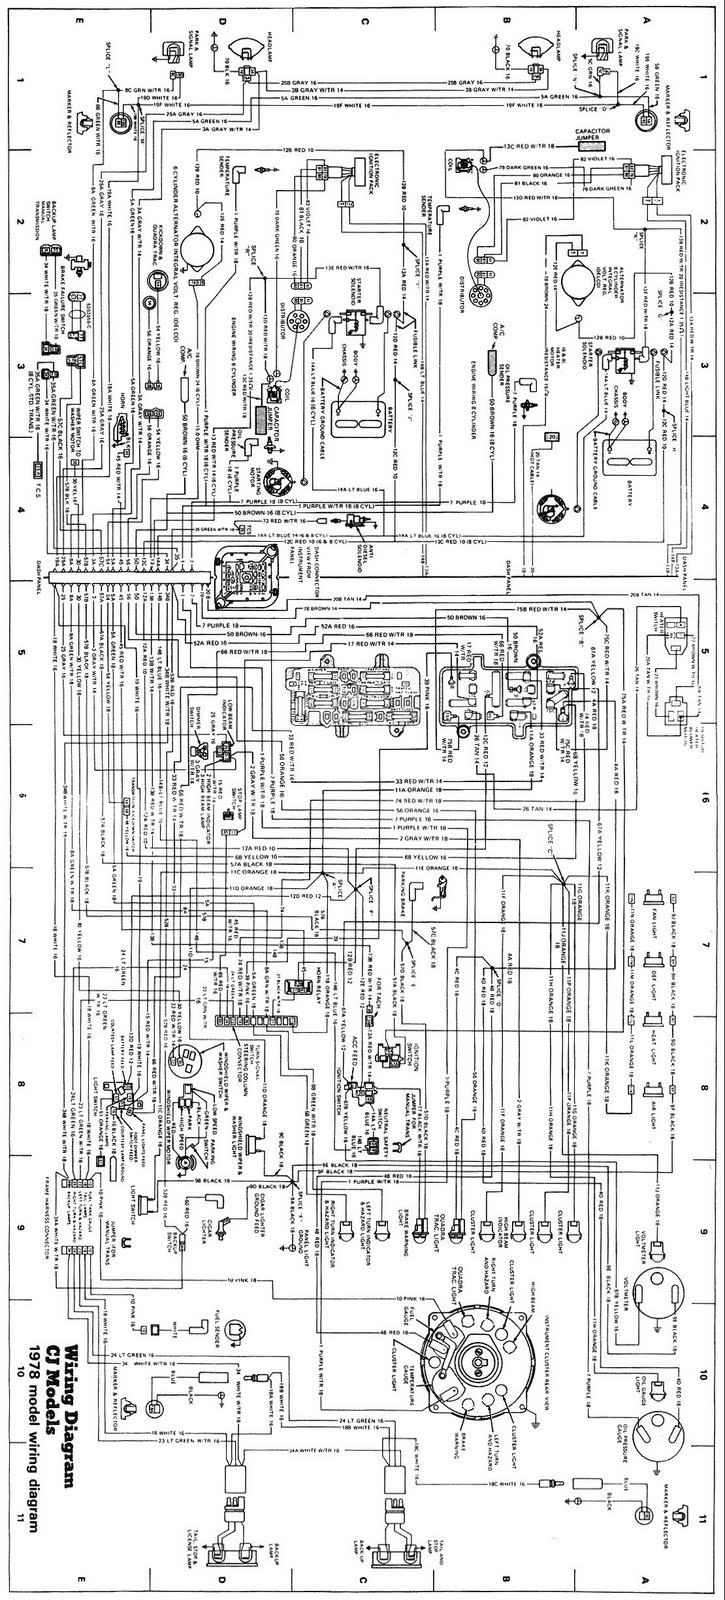 1973 Jeep Cj5 Wiring Diagram Database - Wiring Diagram Sample